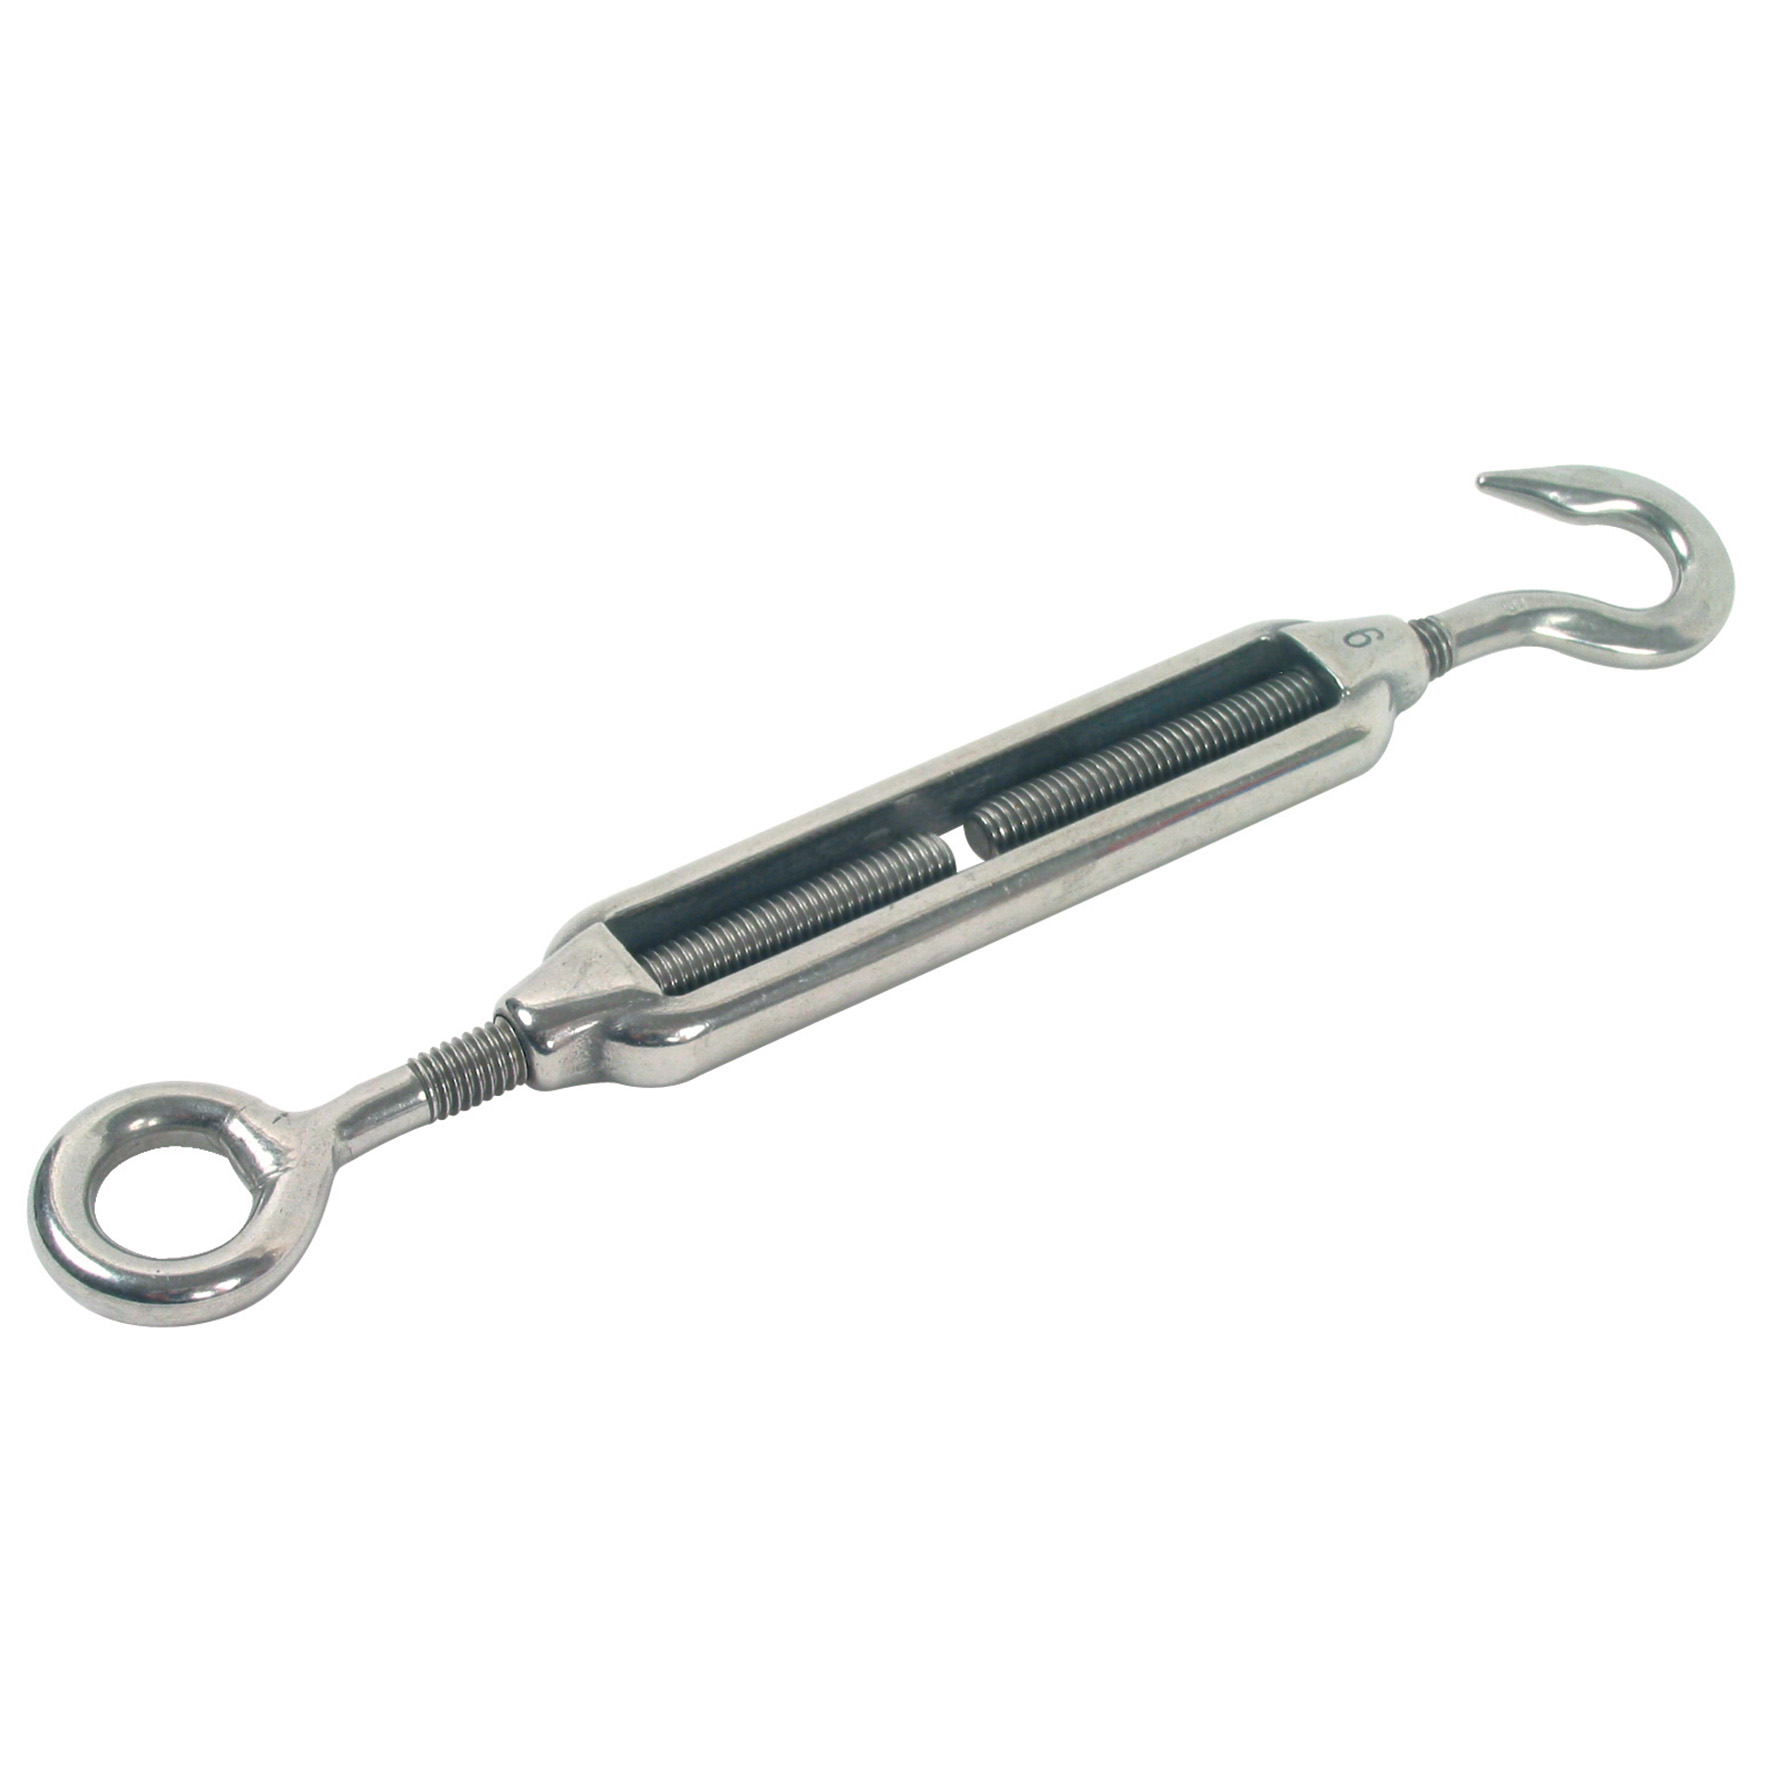 Rigging screw (hook/eye) - Steel - With hook/eye - 